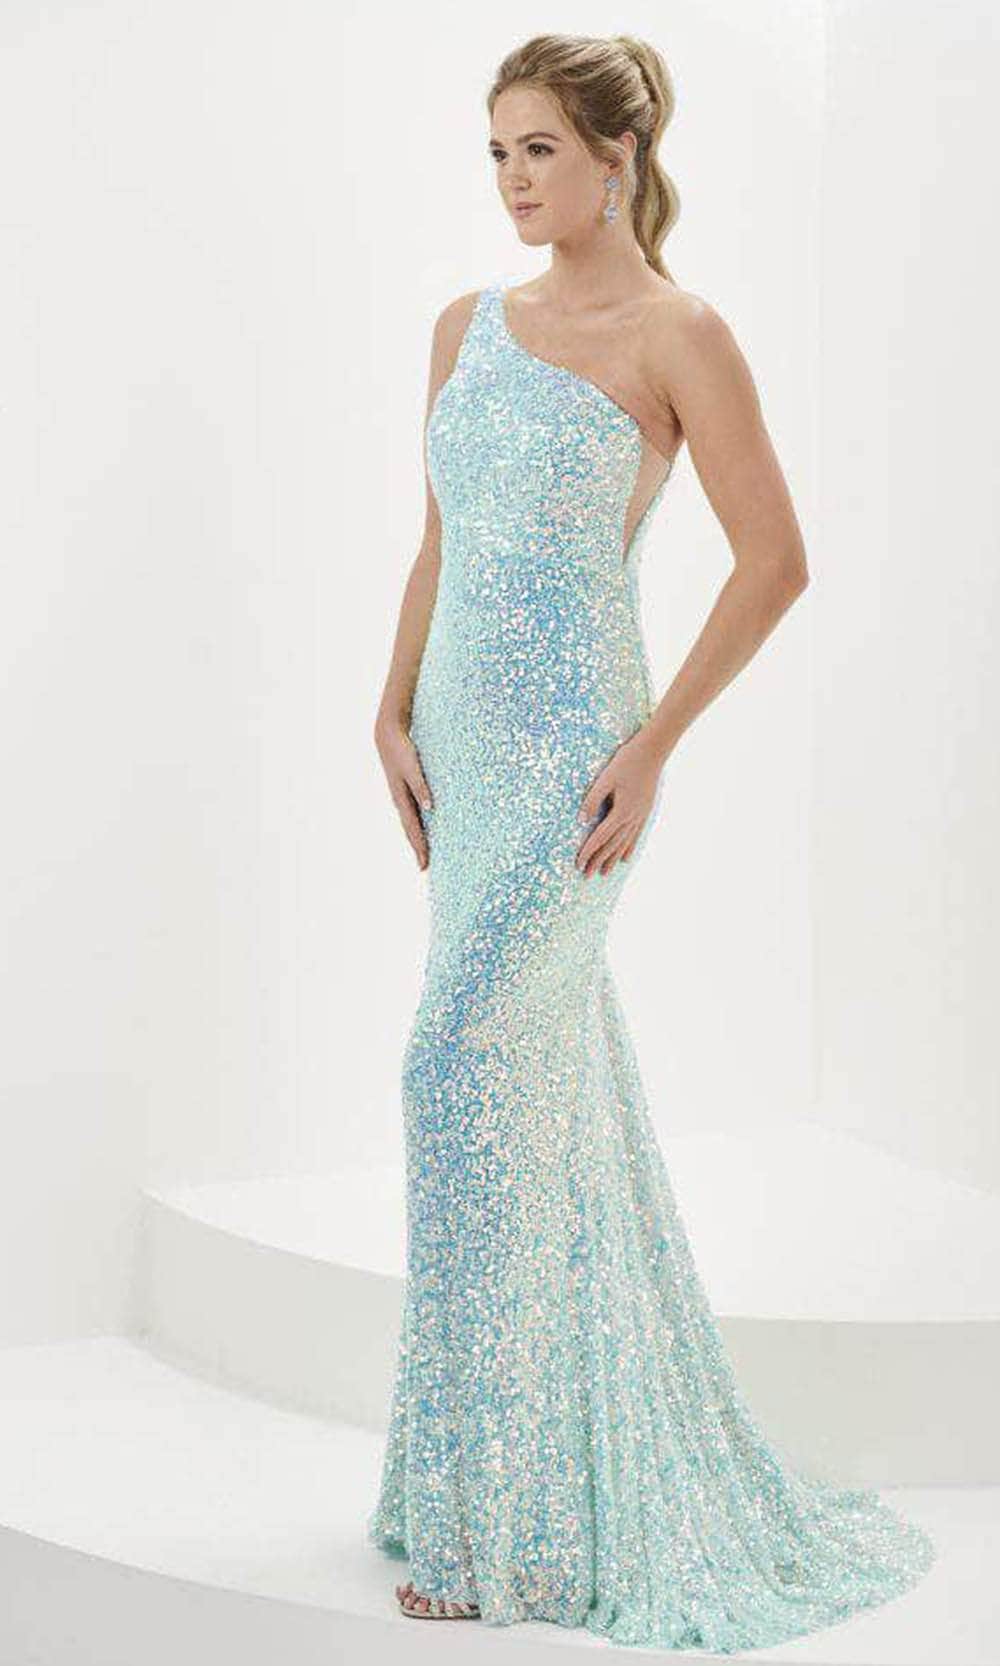 Tiffany Designs 16114 - One Shoulder Sequin Evening Gown Evening Dresses 0 / Mint